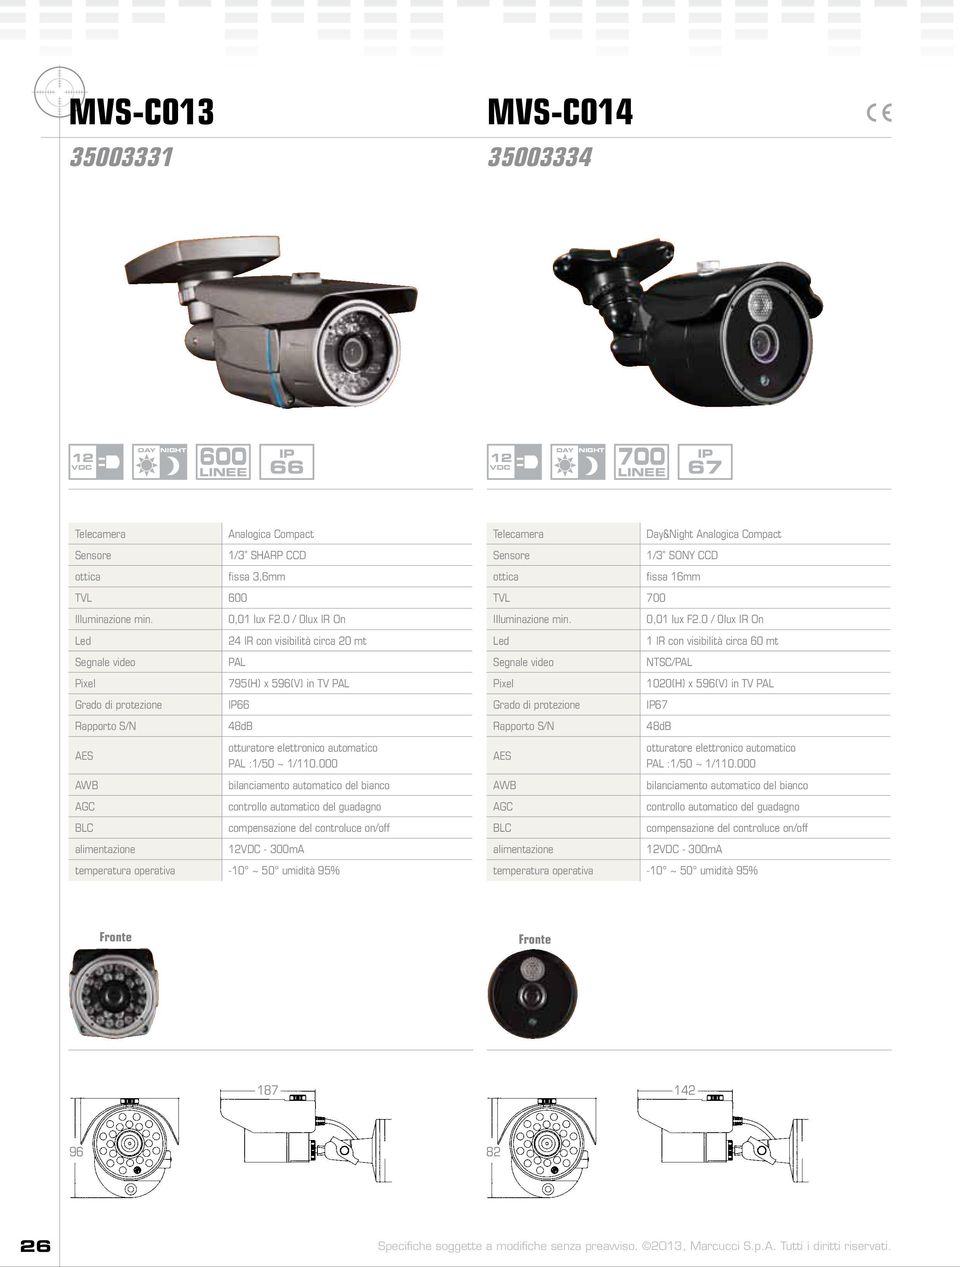 000-300mA TVL 700 Day&Night Analogica Compact 1/3 Sony CCD fissa 16mm 0,01 lux F2.